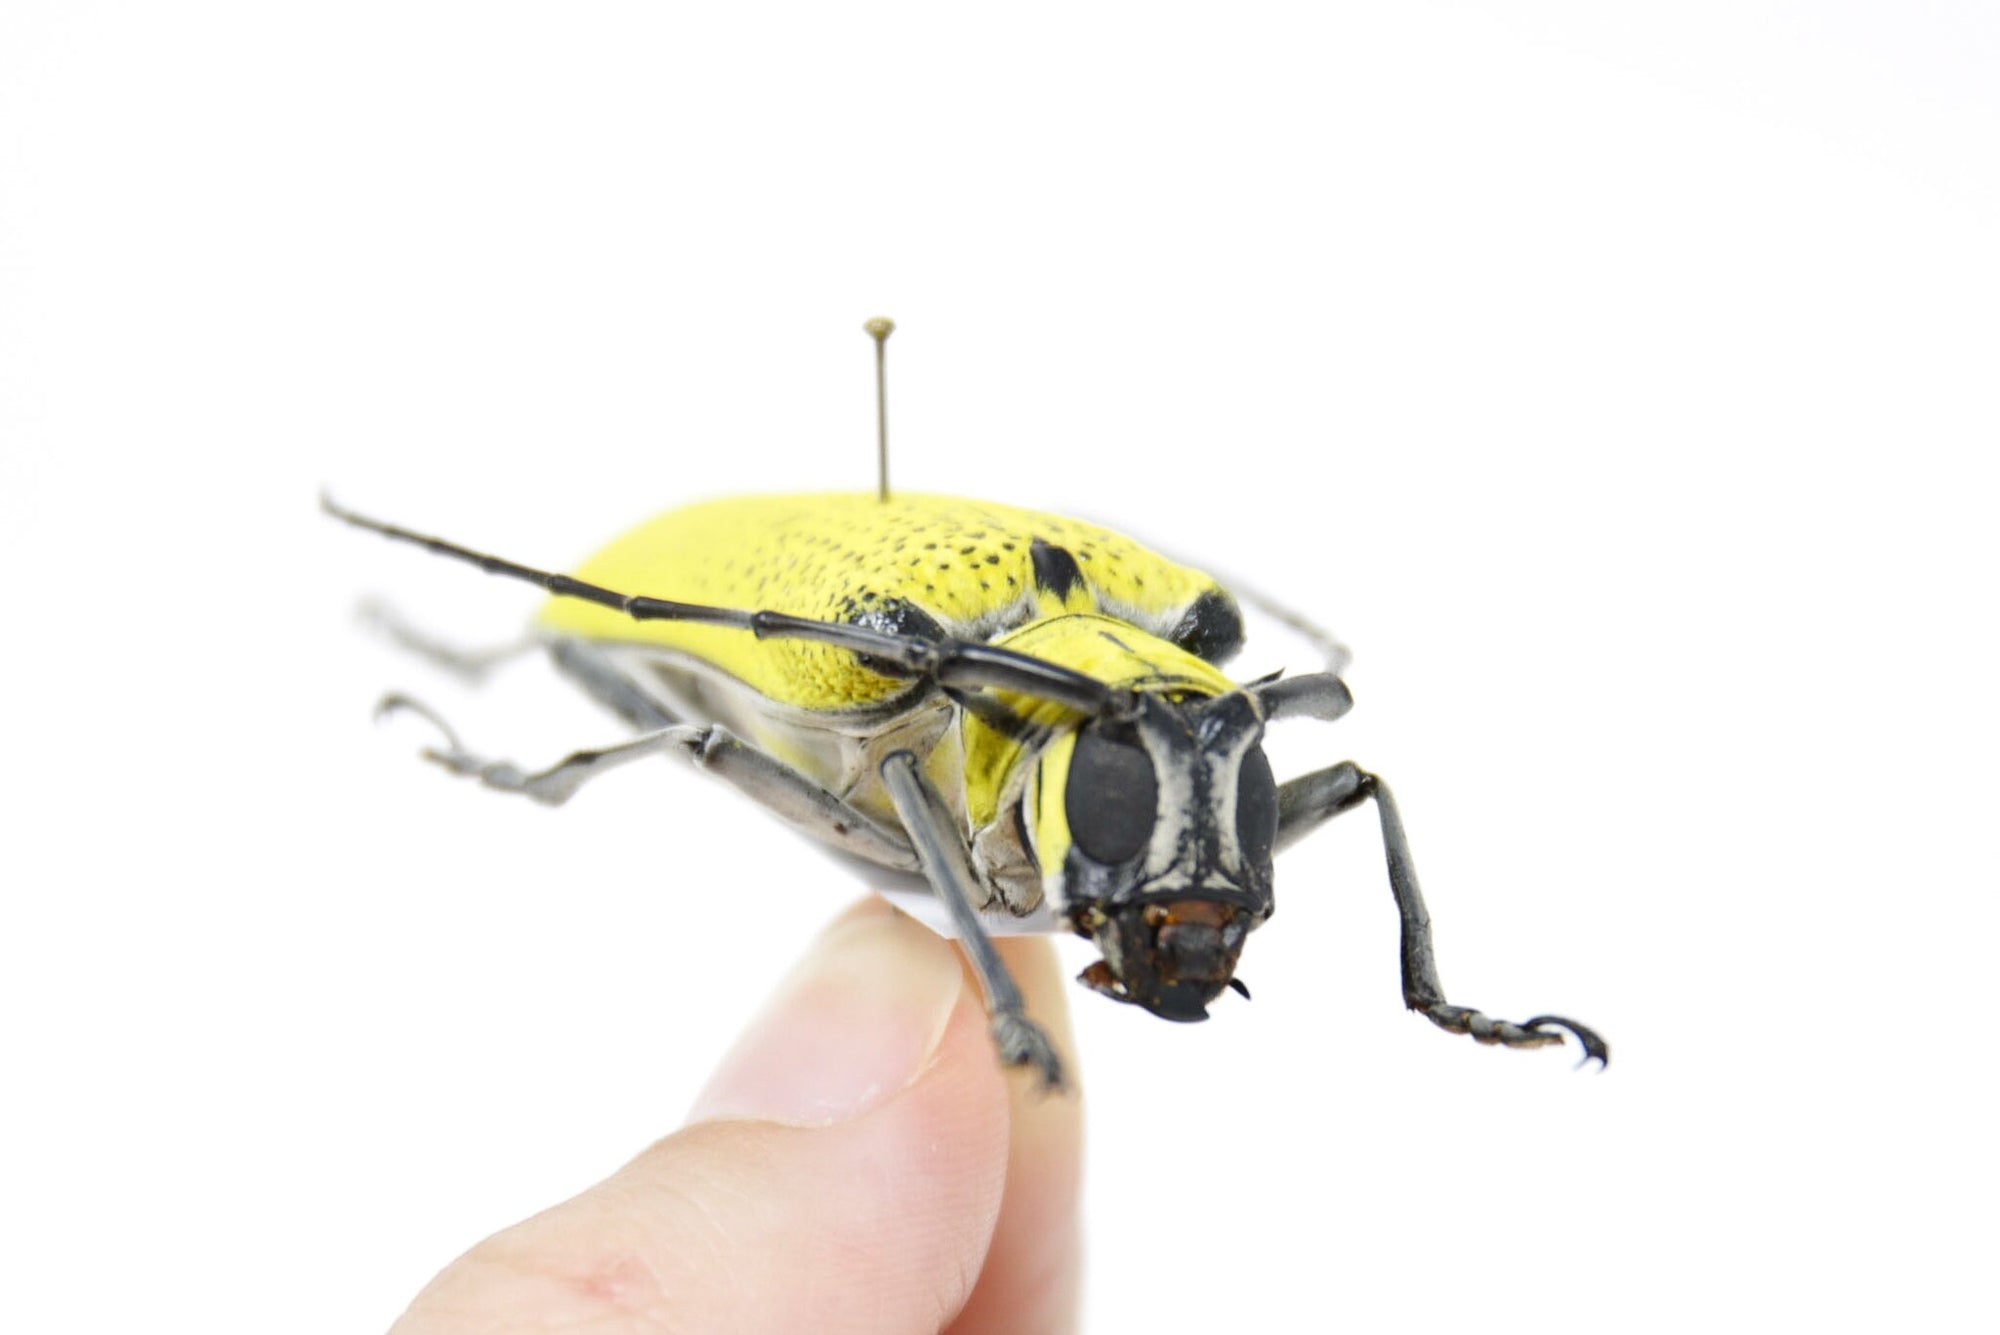 Celosterna pollinosa 51.6mm, A1 Real Beetle Pinned Set Specimen, Entomology Taxidermy #OC42